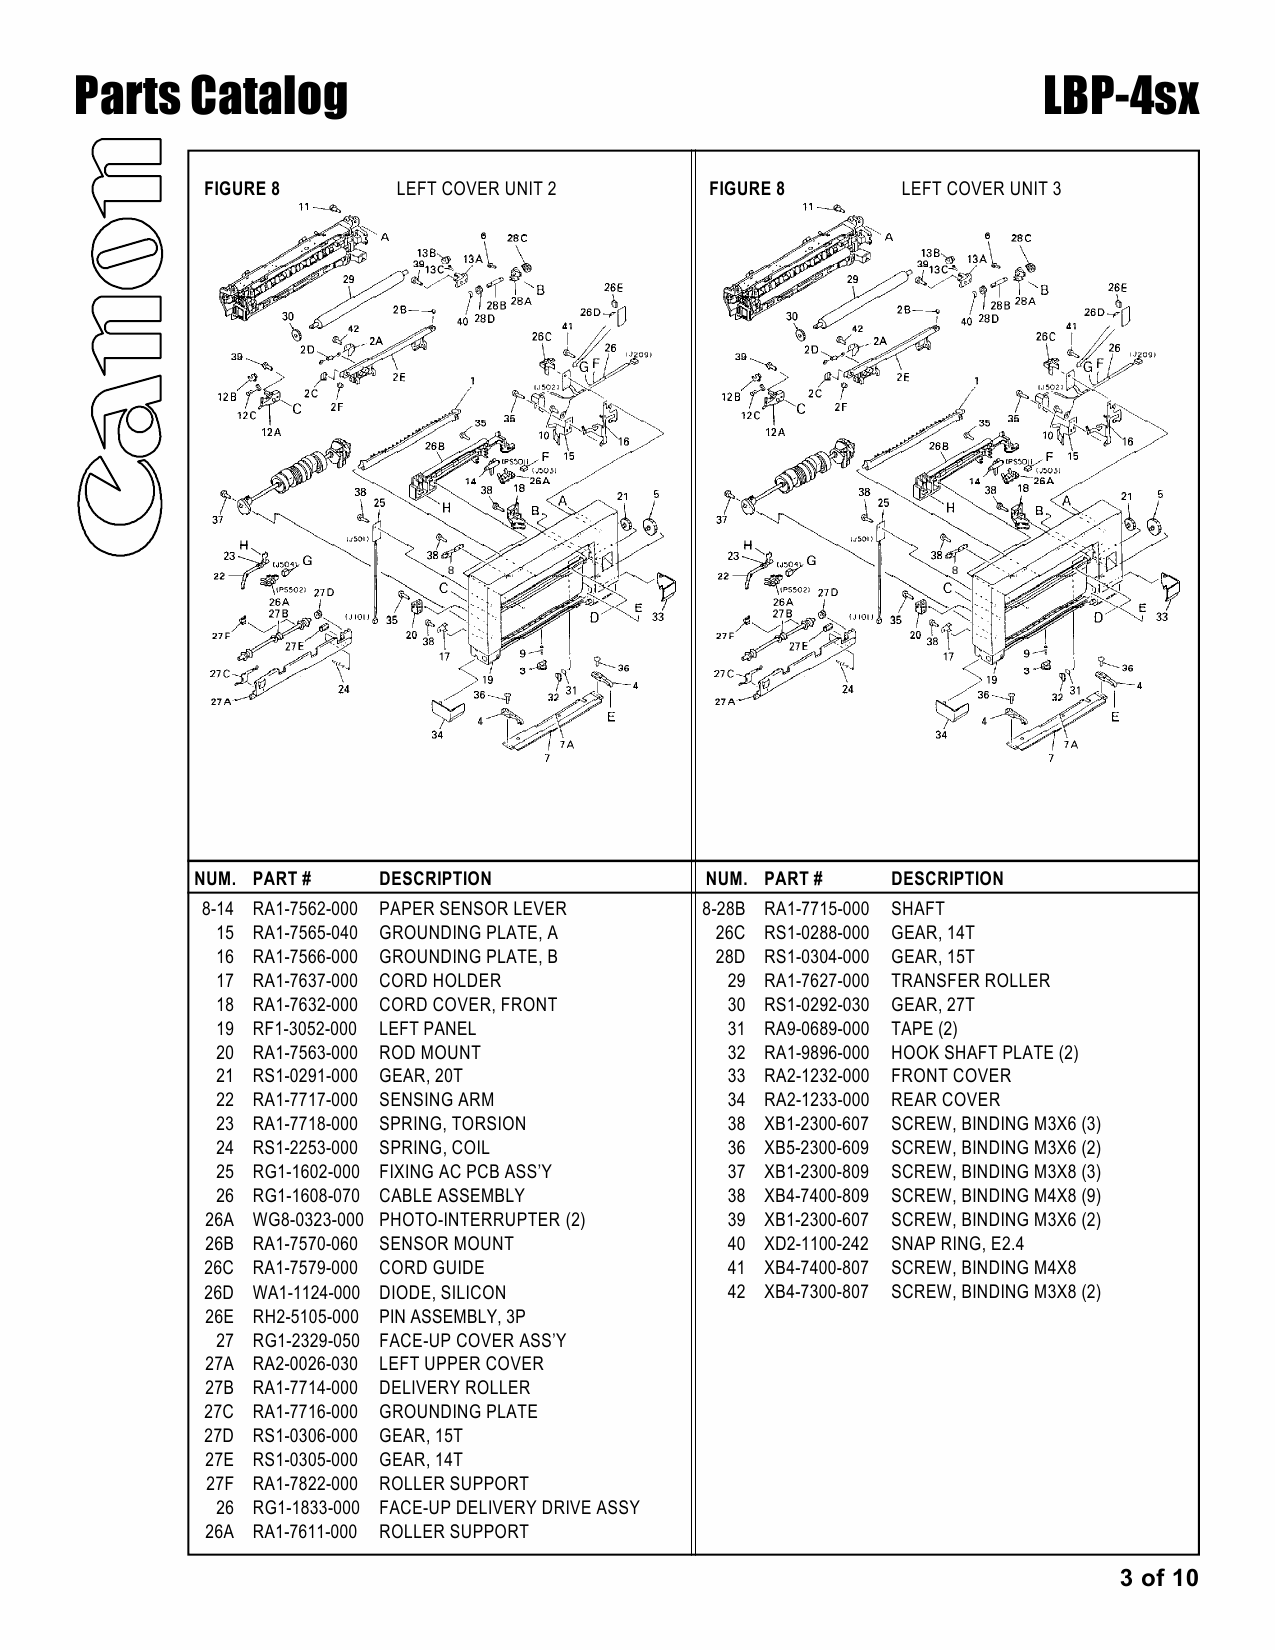 Canon imageCLASS LBP-4sx Parts Catalog Manual-3